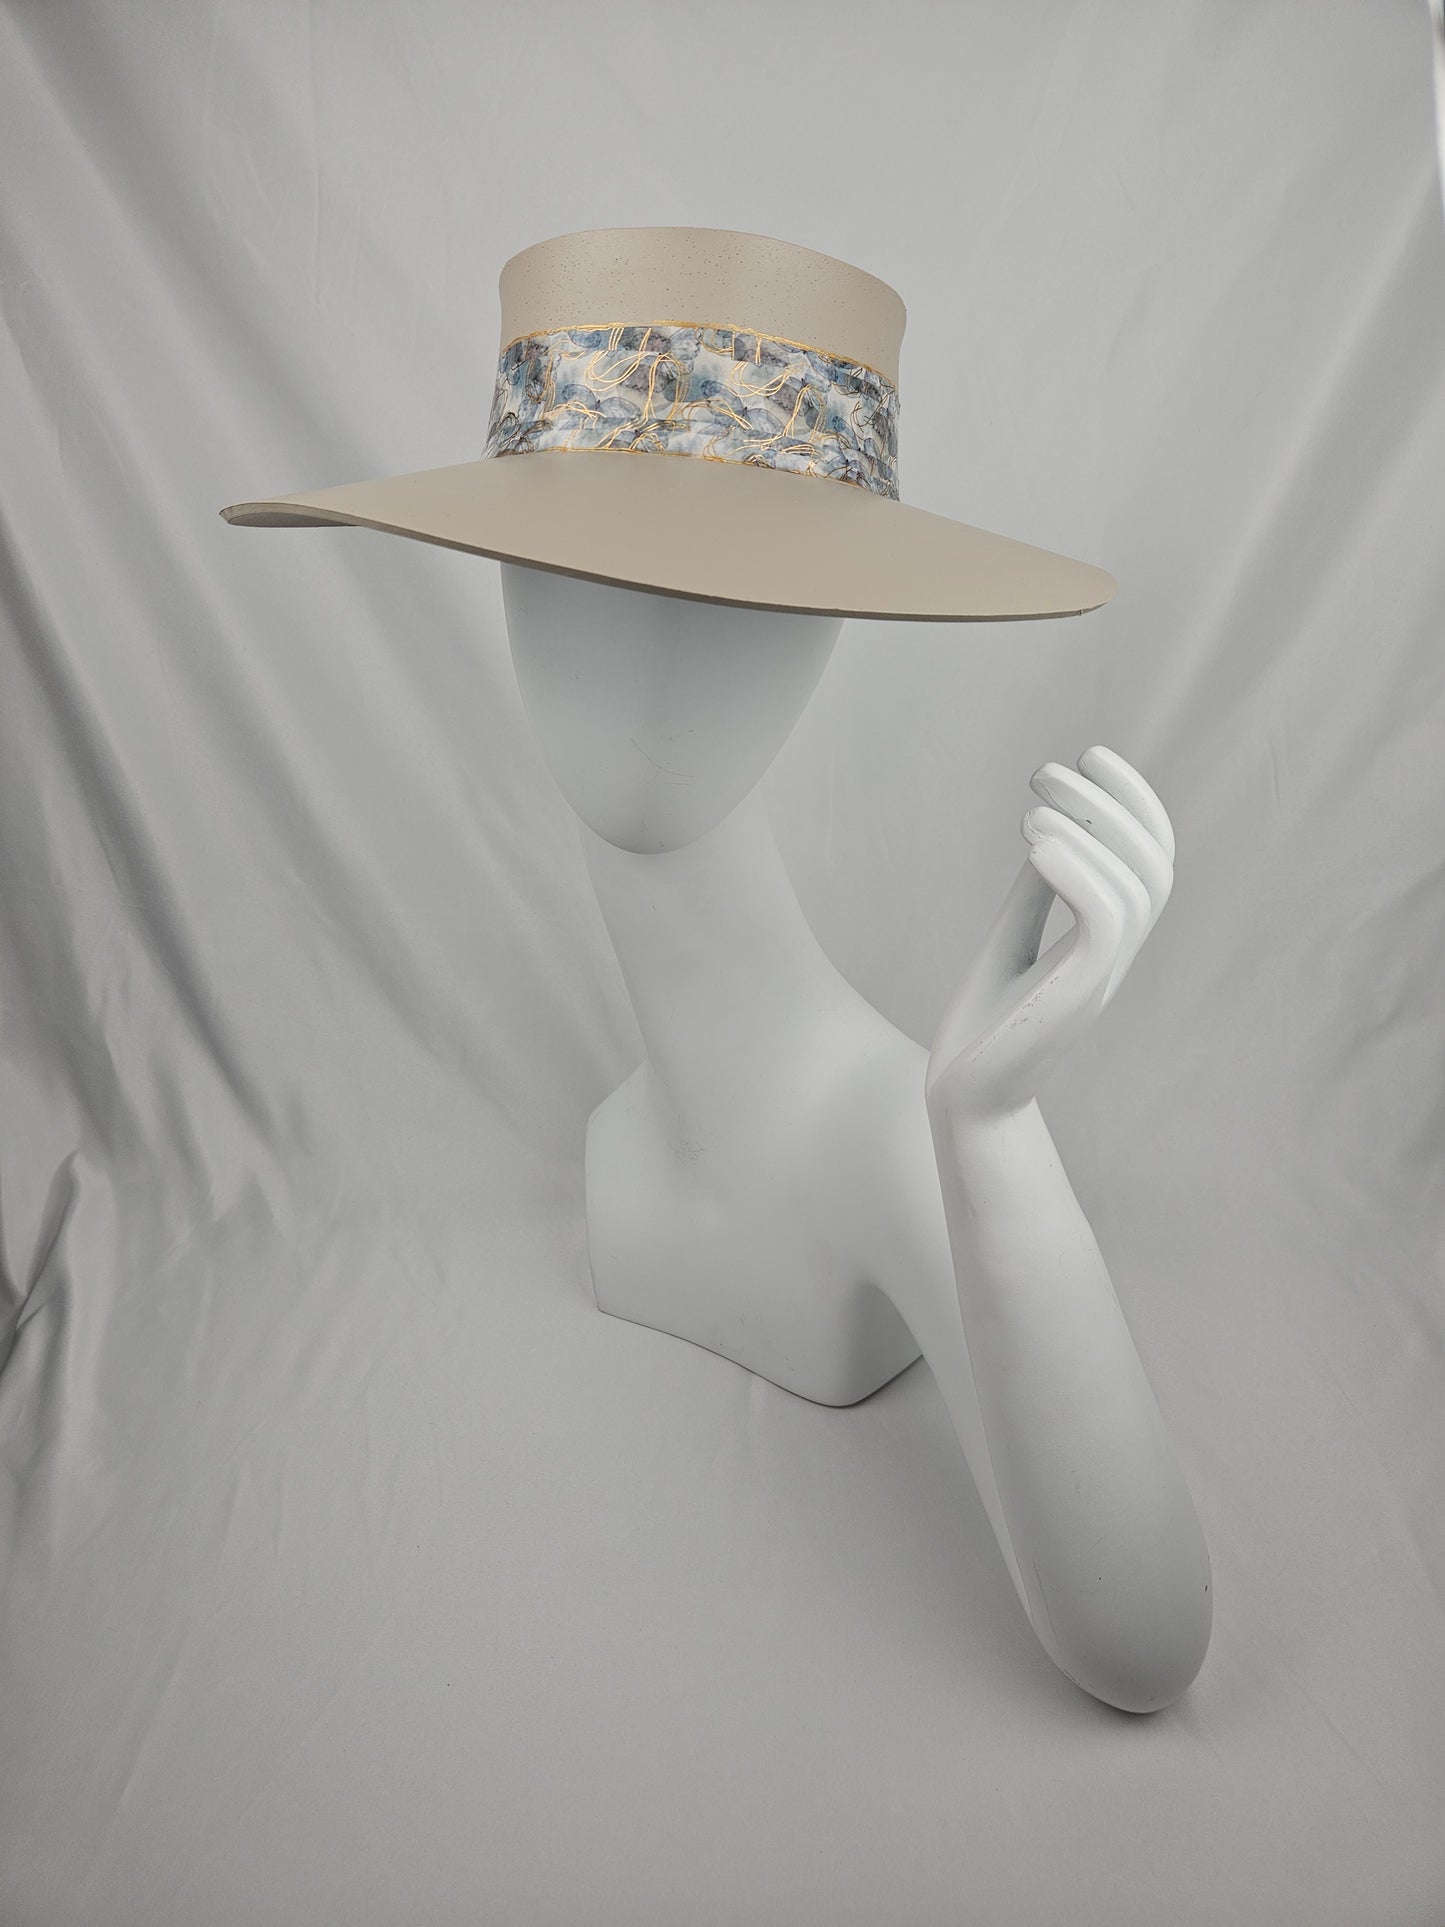 Tall Truly Taupe Audrey Foam Sun Visor Hat with Soft Blue Floral Band: Walks, Brunch, Swim, Garden, Golf, Easter, Faux Leather, Church, No Headache